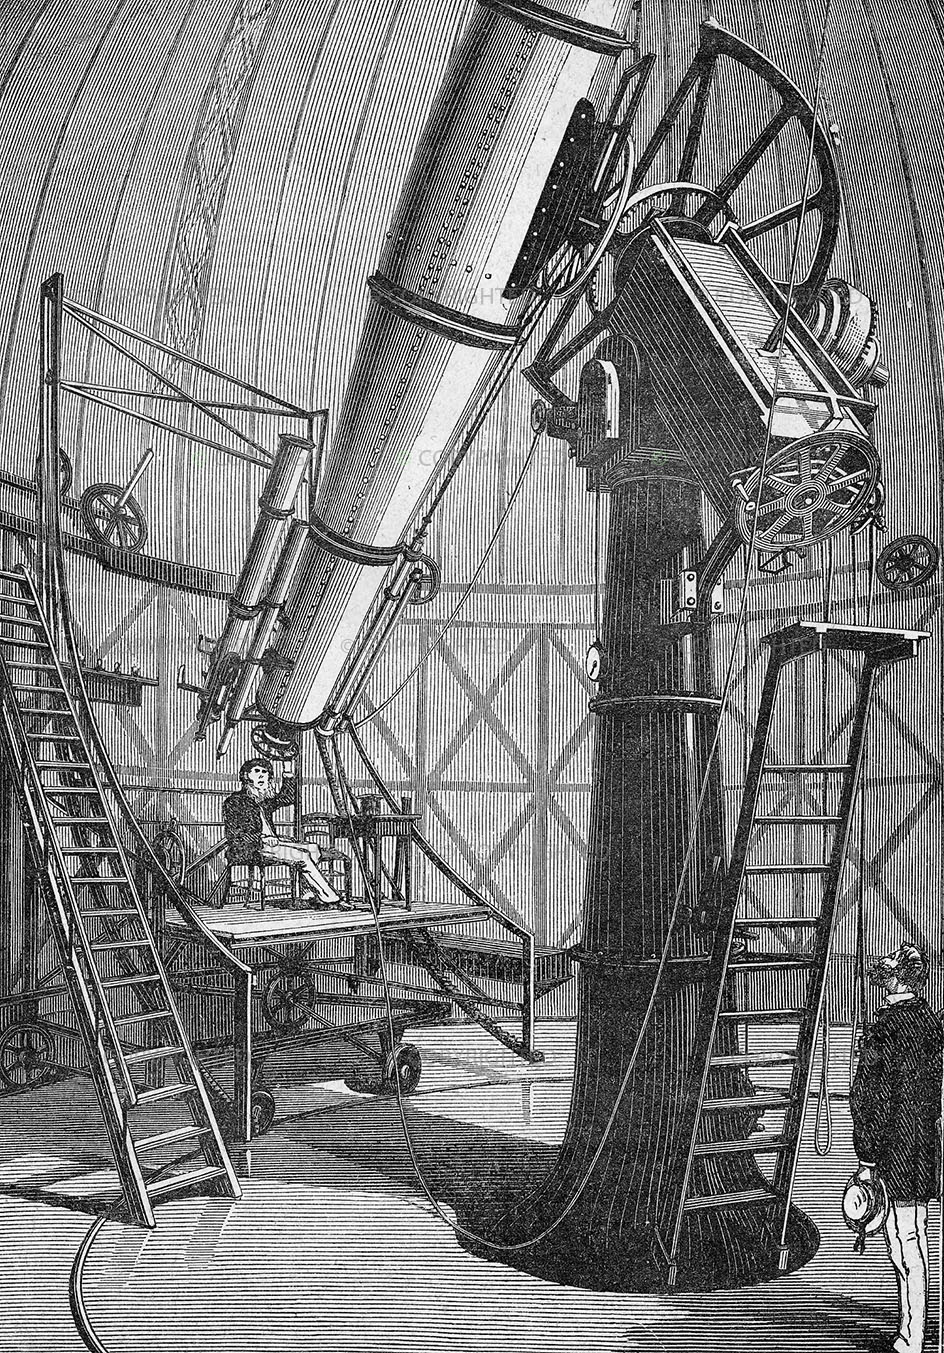 Telescopio a rifrazione o rifrattore